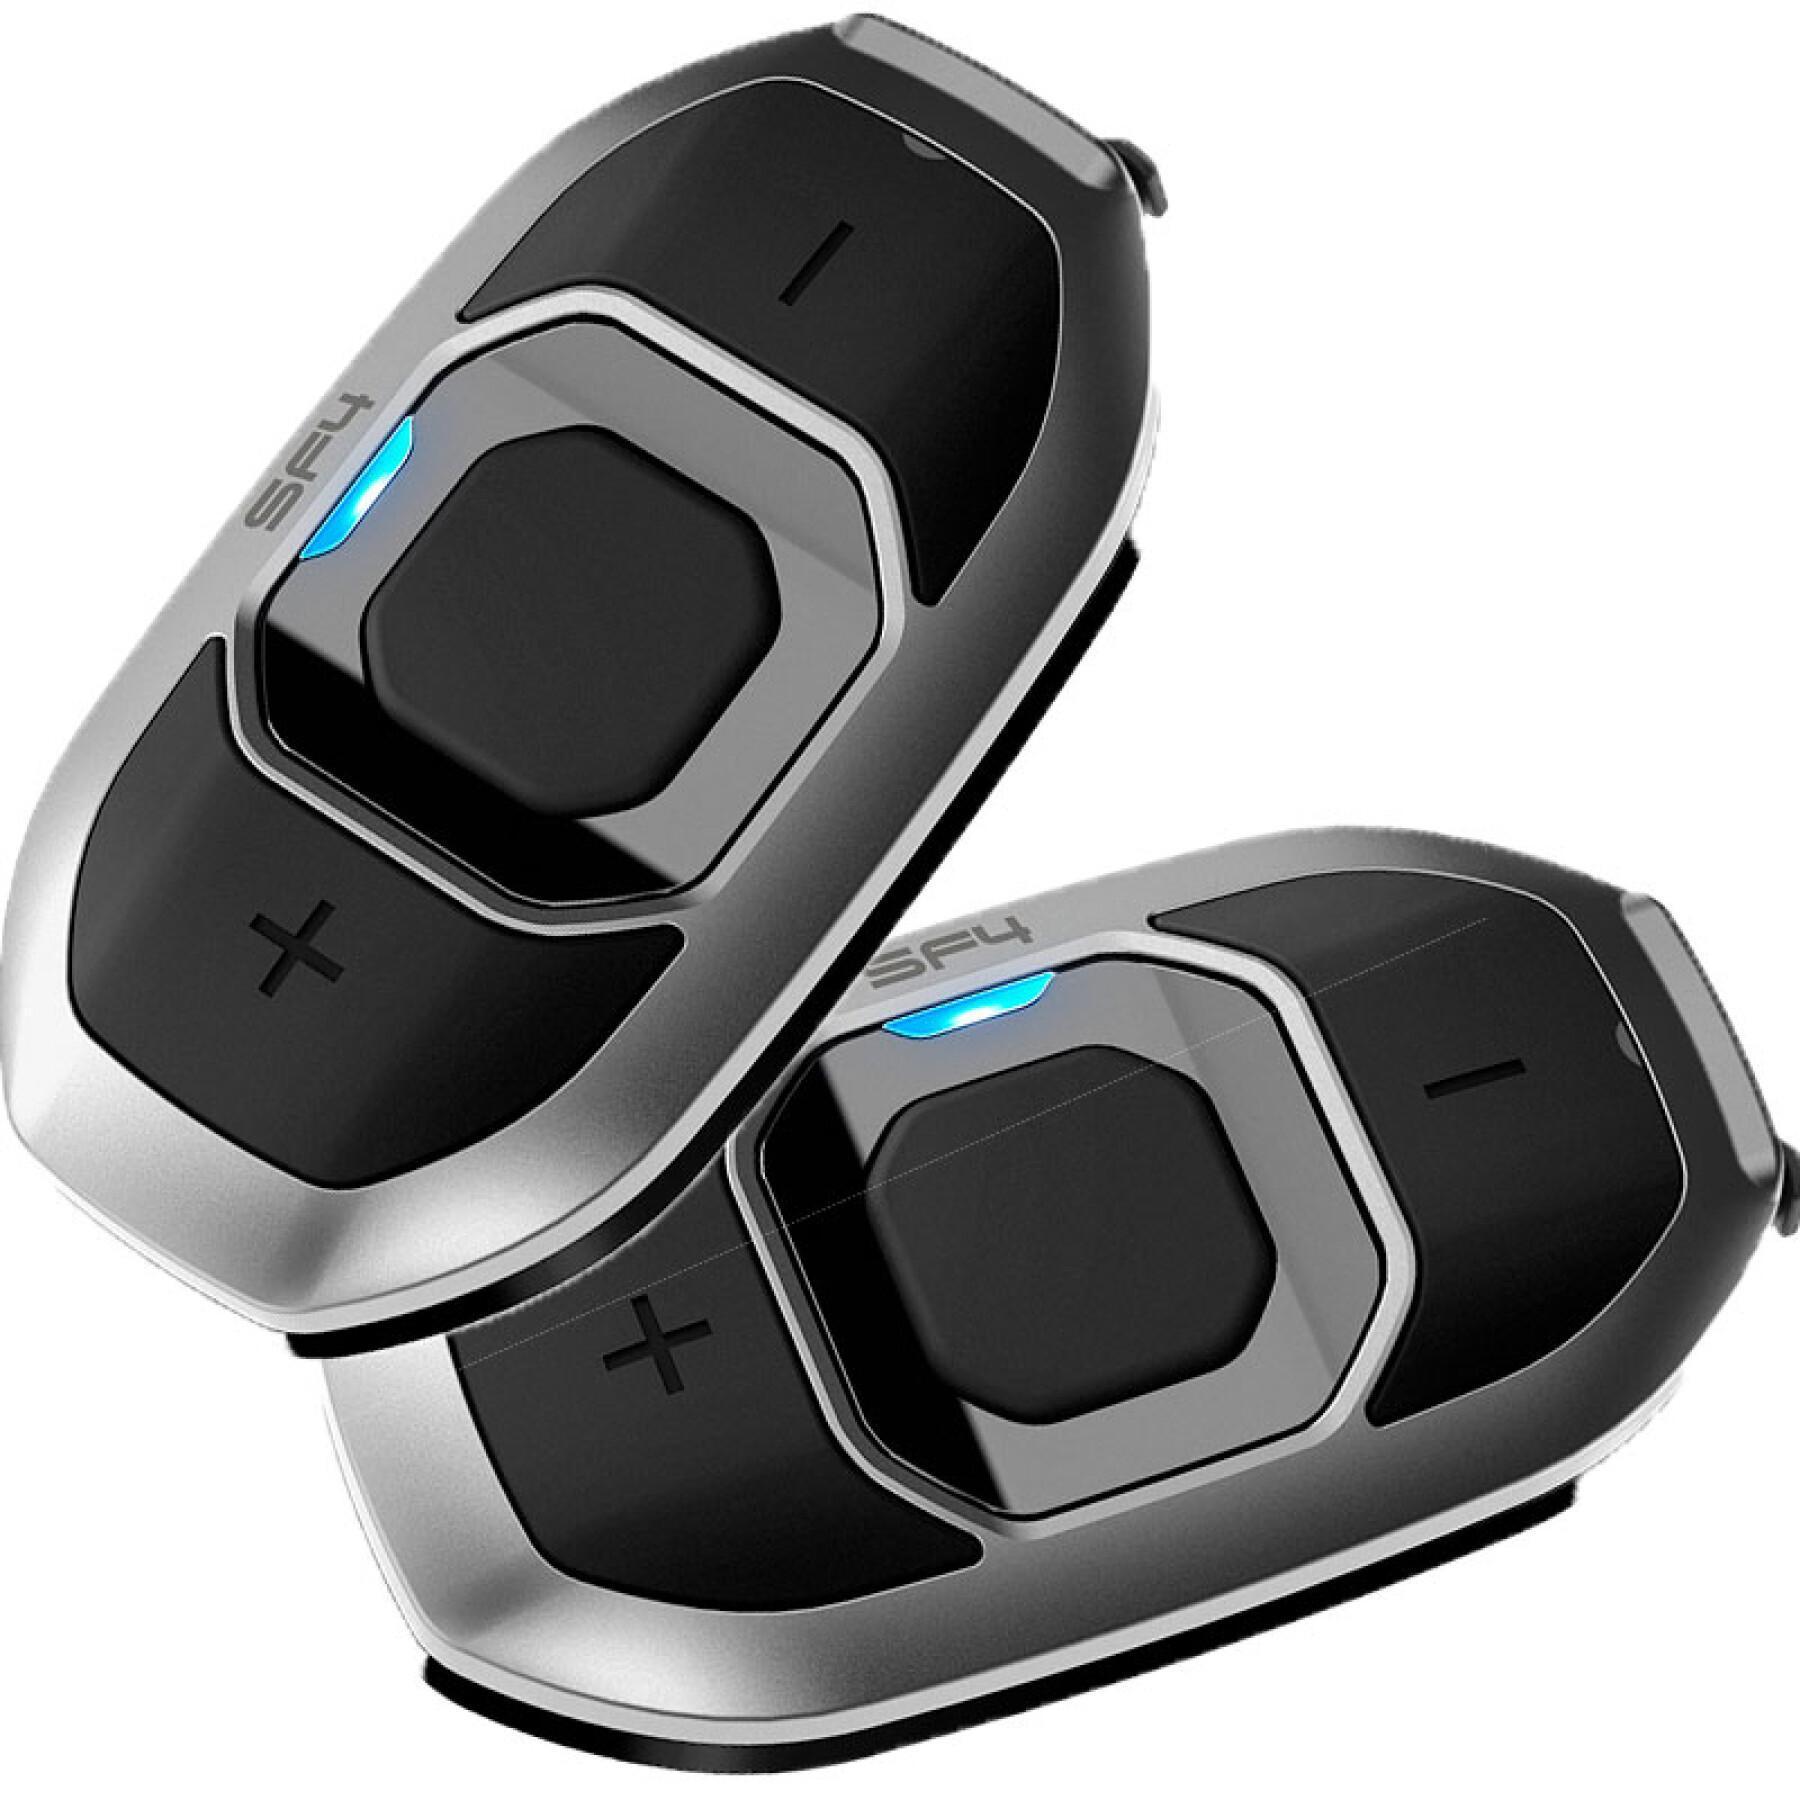 Intercom Sena SF4 DUO - Intercom Bluetooth - Accessoires High-Tech -  Equipement du motard